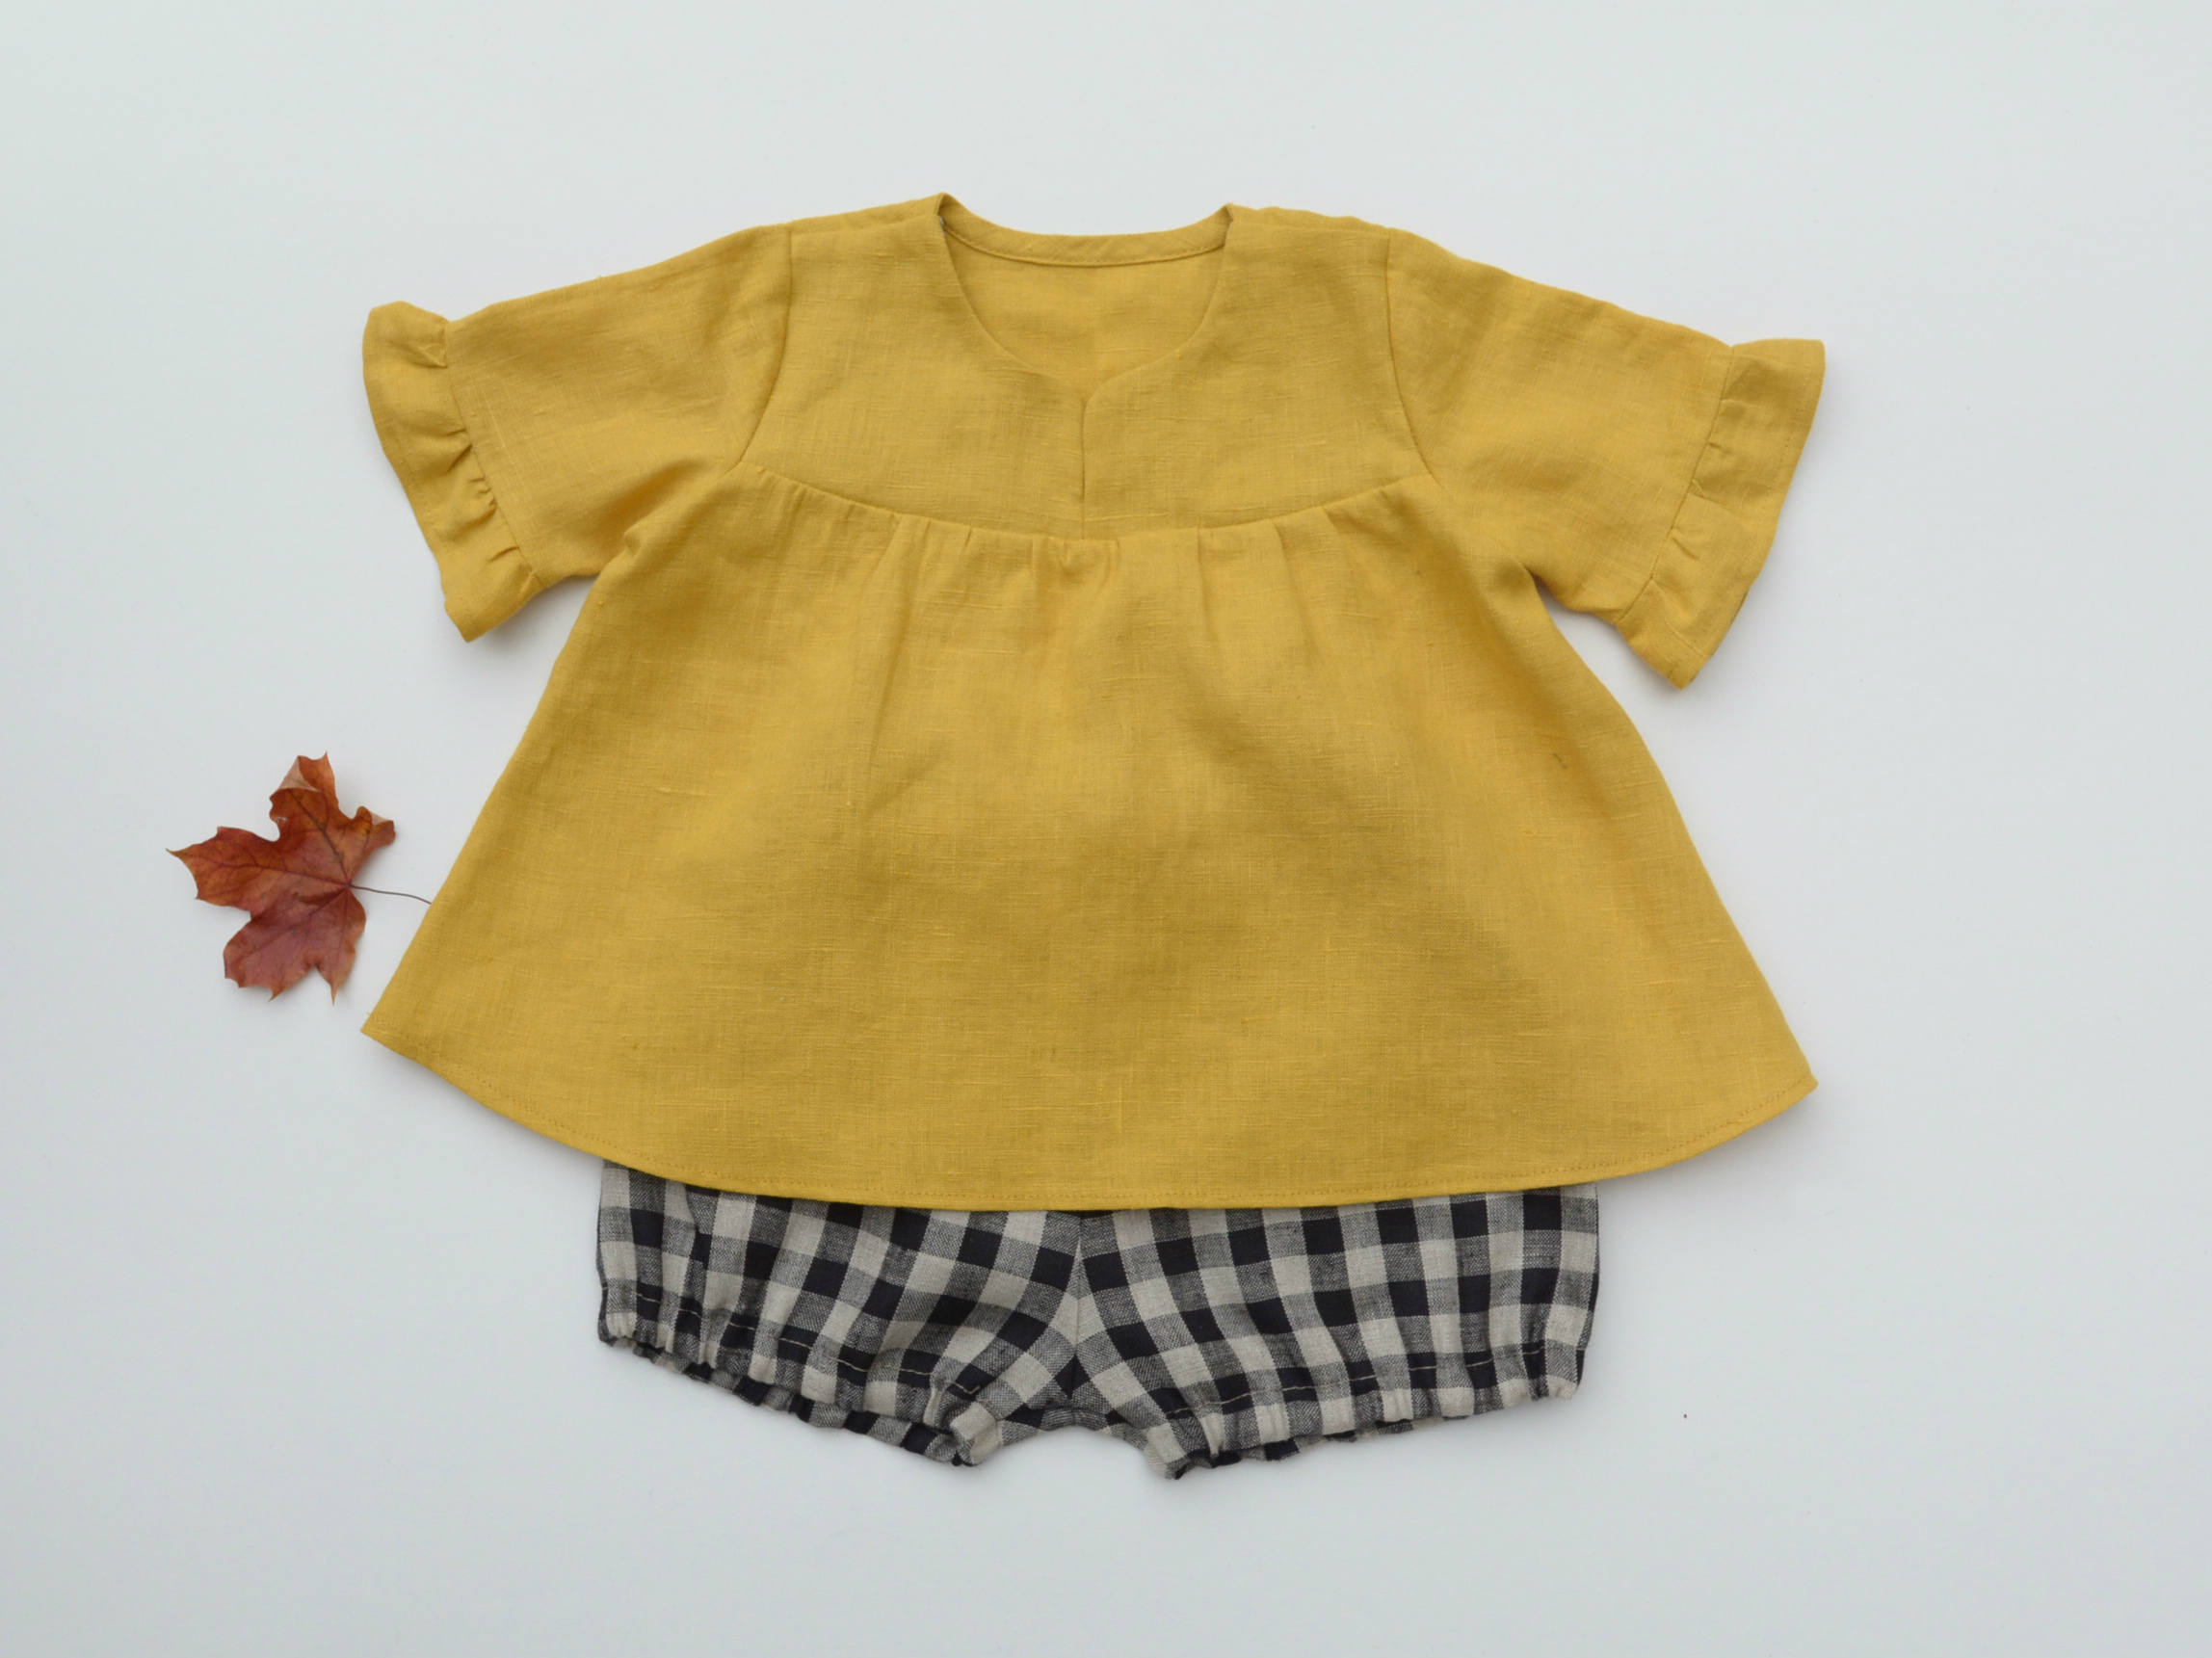 Qiylii Toddler Kids Baby Girl Ruffle Cuff Cowgirl Long Sleeve Cotton T-Shirt Top Blouse 